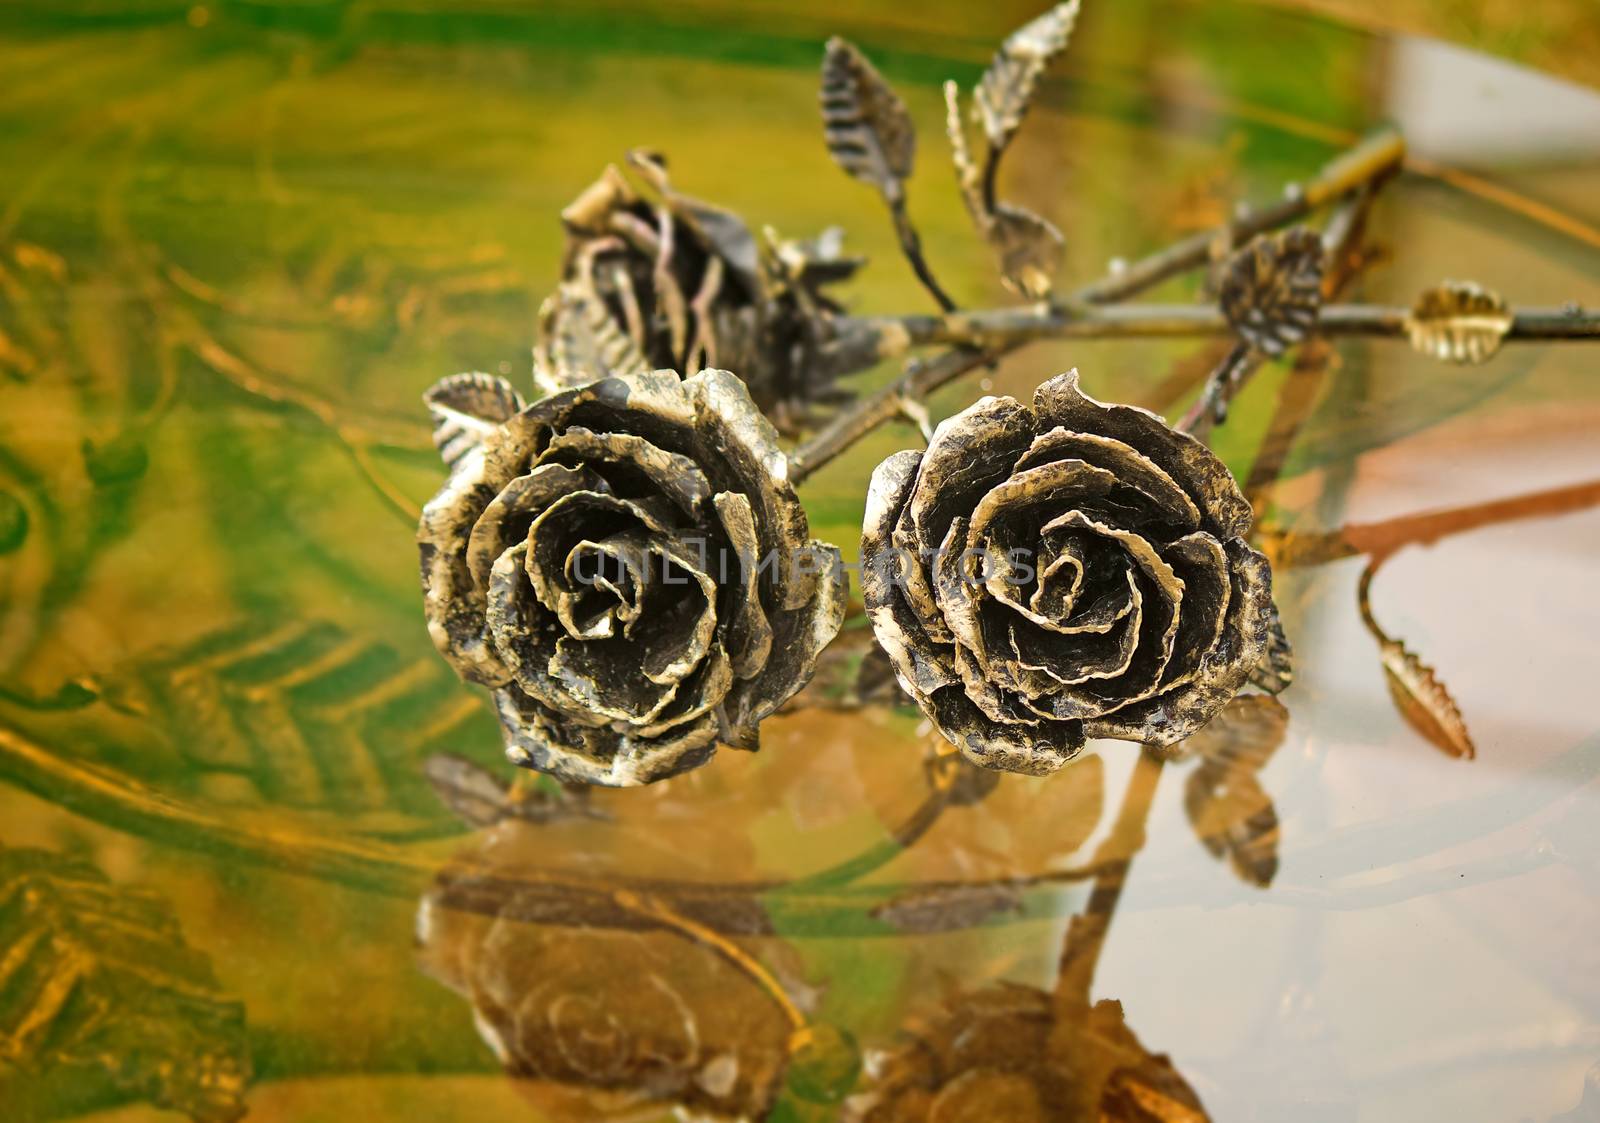 The shiny metal forged roses, handmade by georgina198